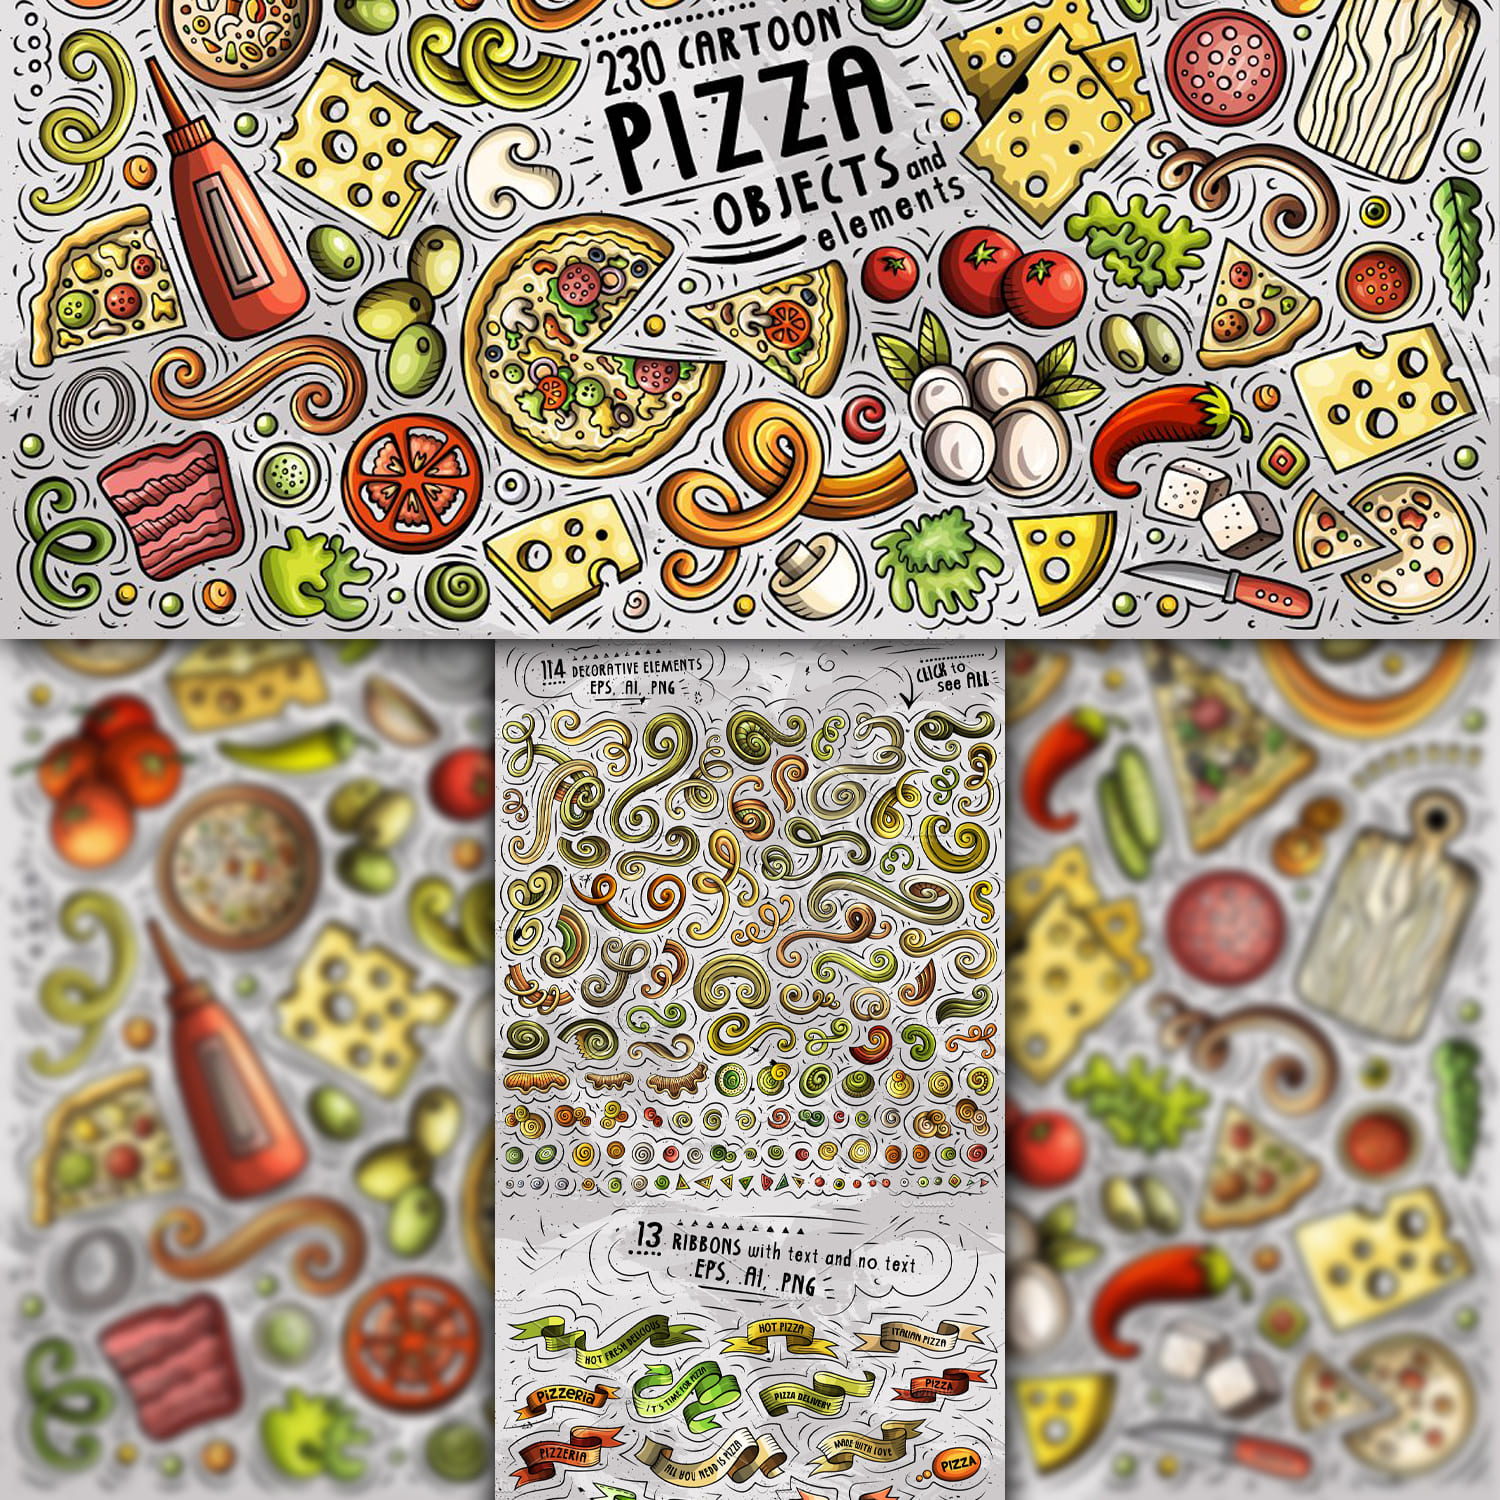 Pizza Cartoon Vector Objects Set 1500 1500 2.